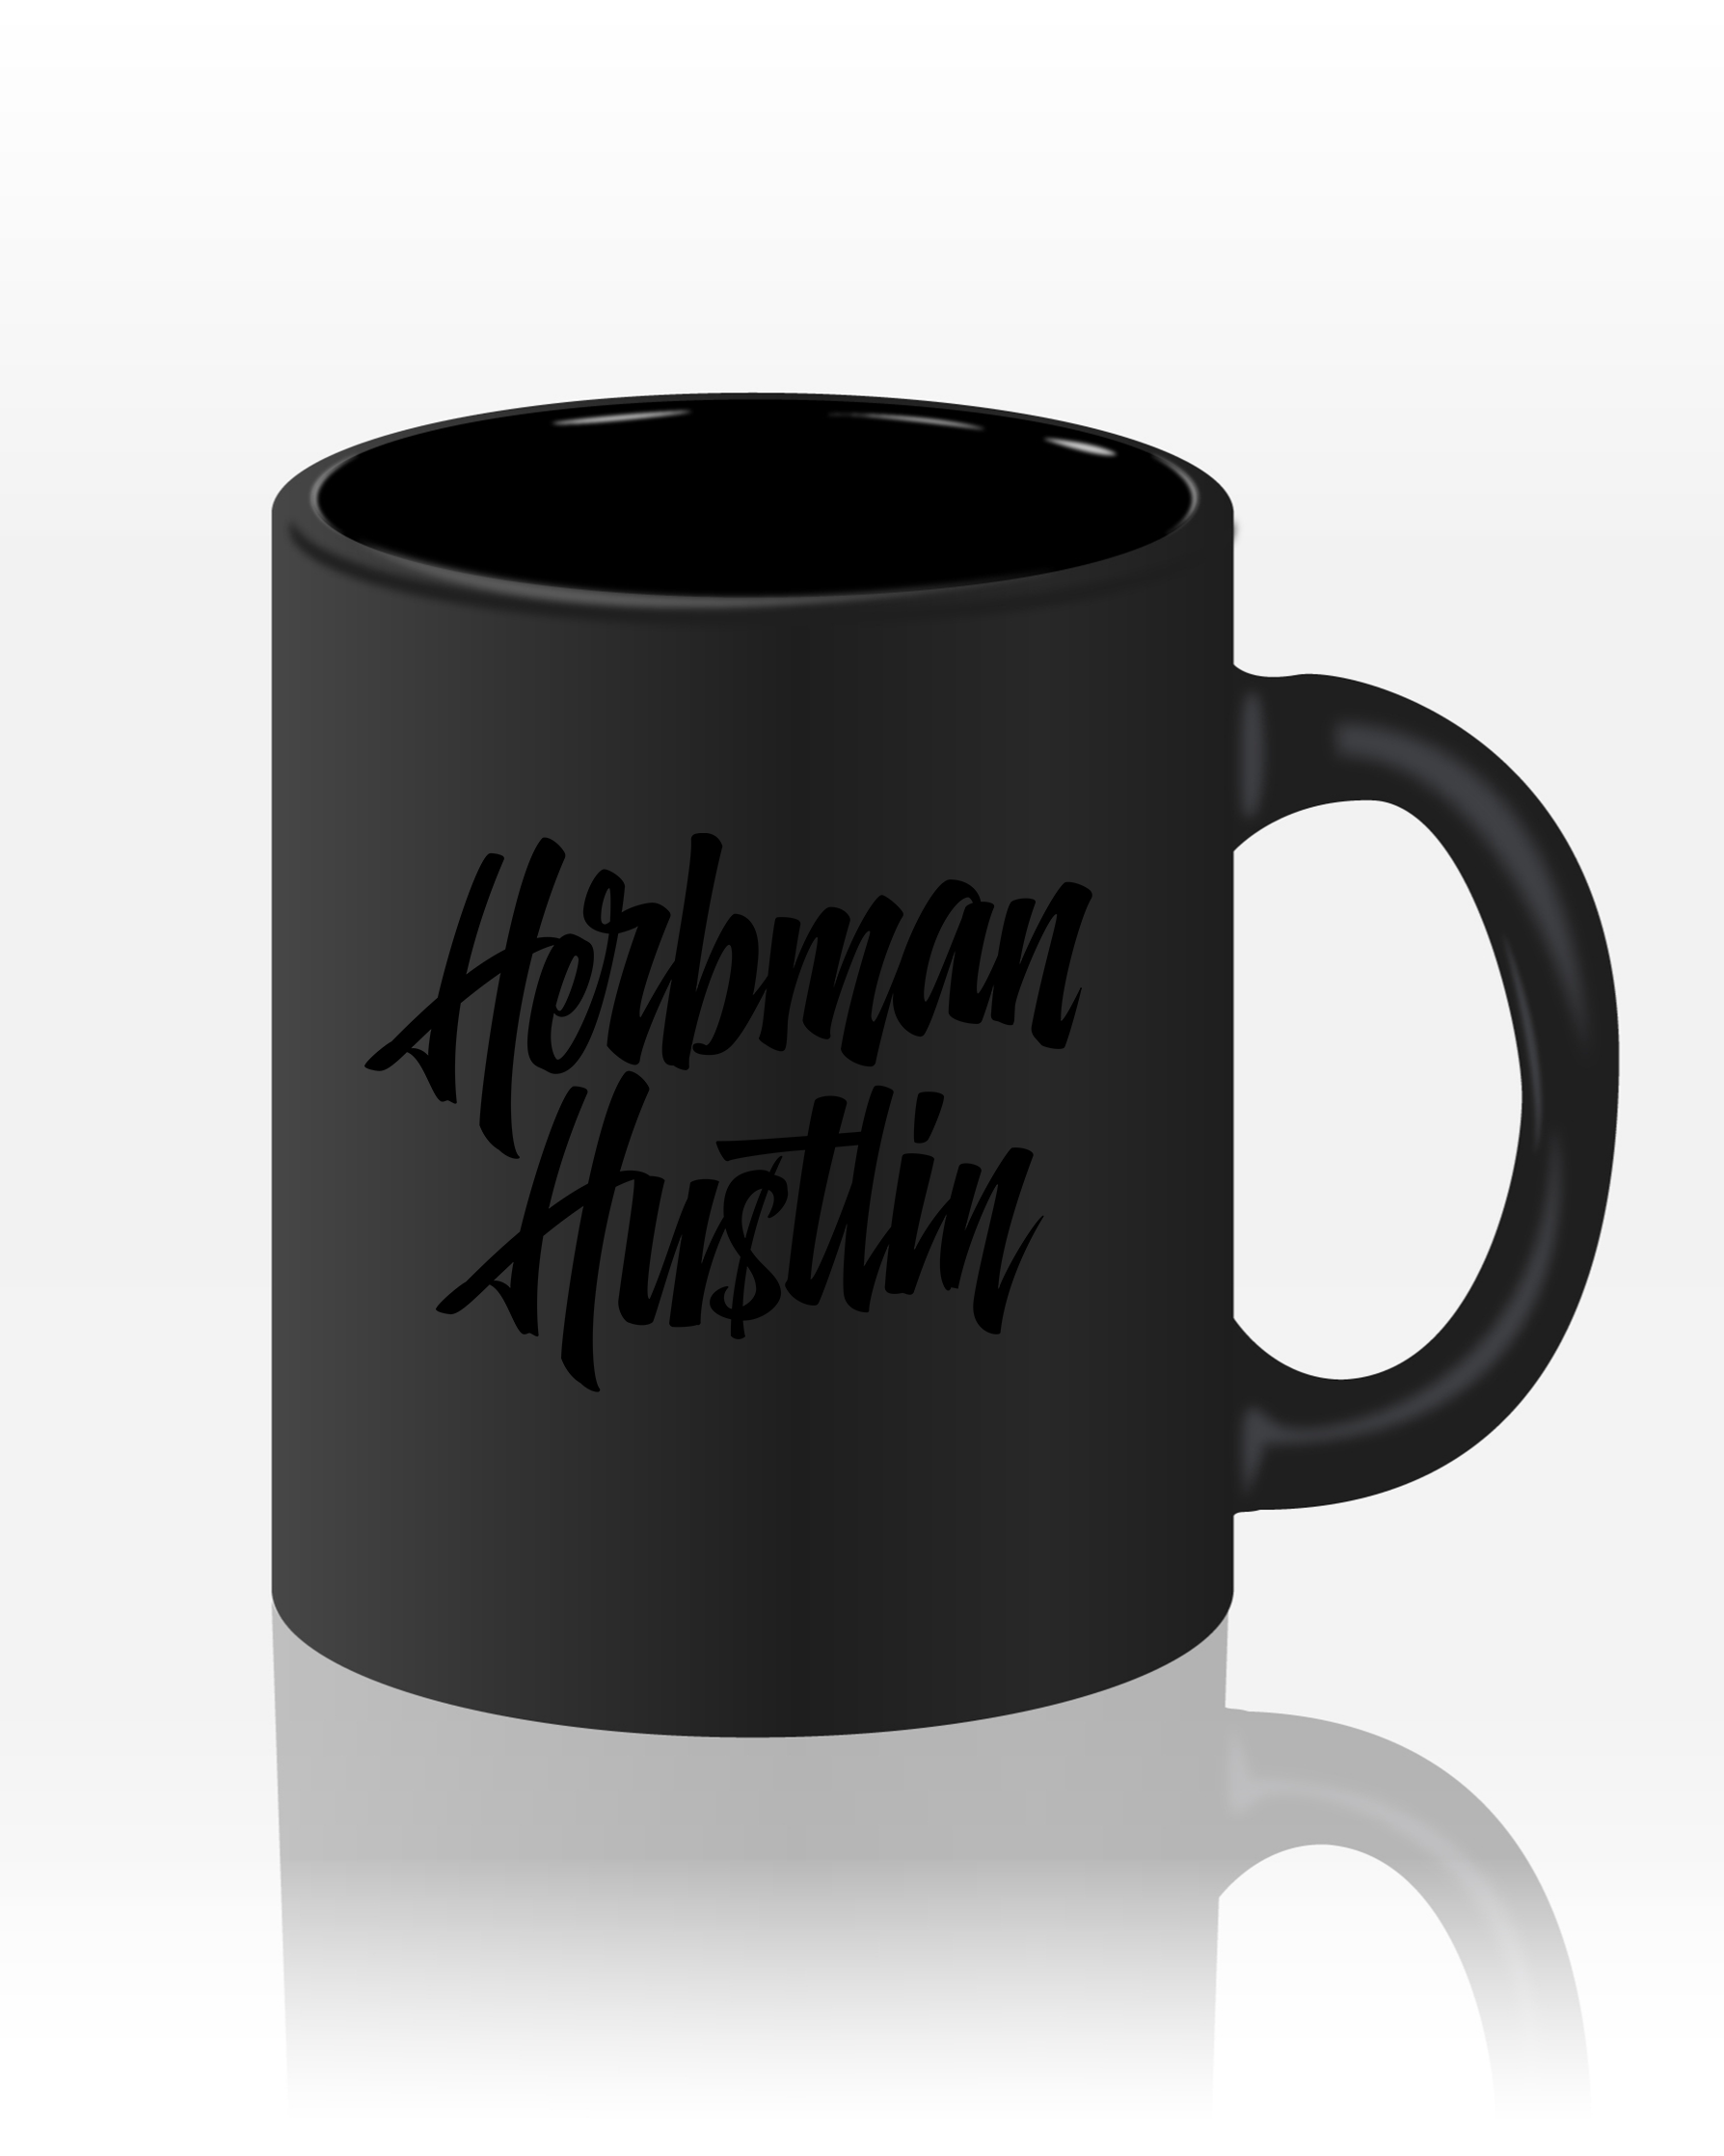 Herbman Hustlin Logo Mug - Black on Black